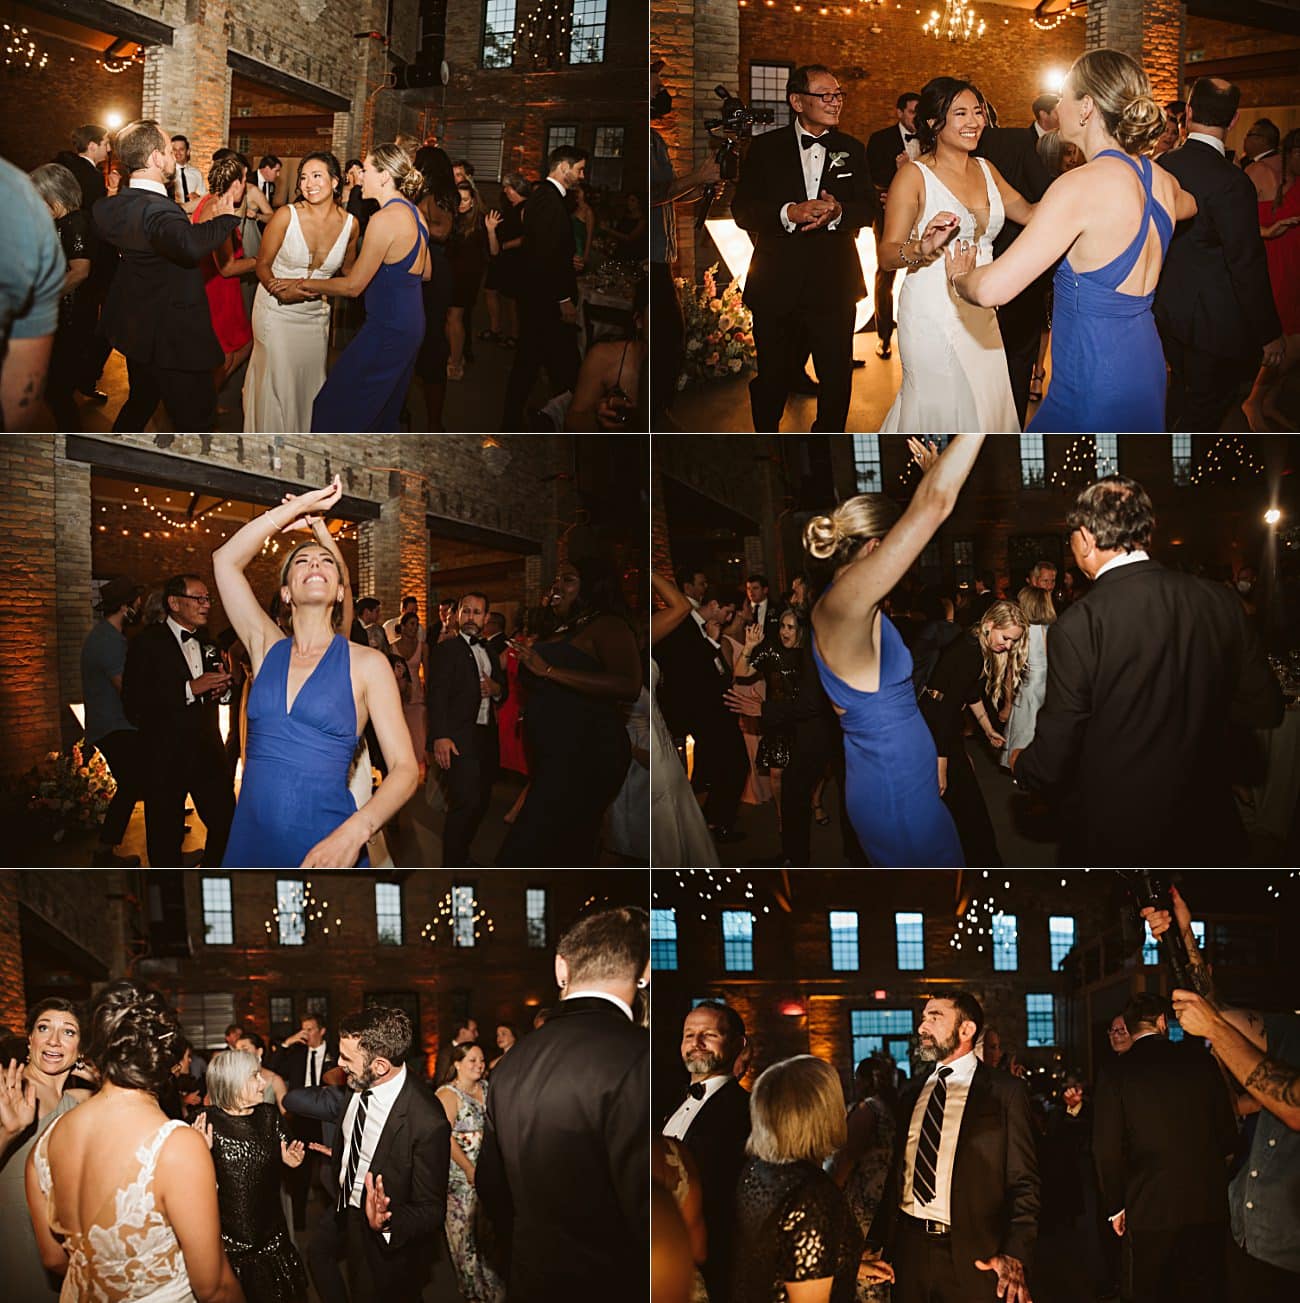 Dancing photos at wedding reception